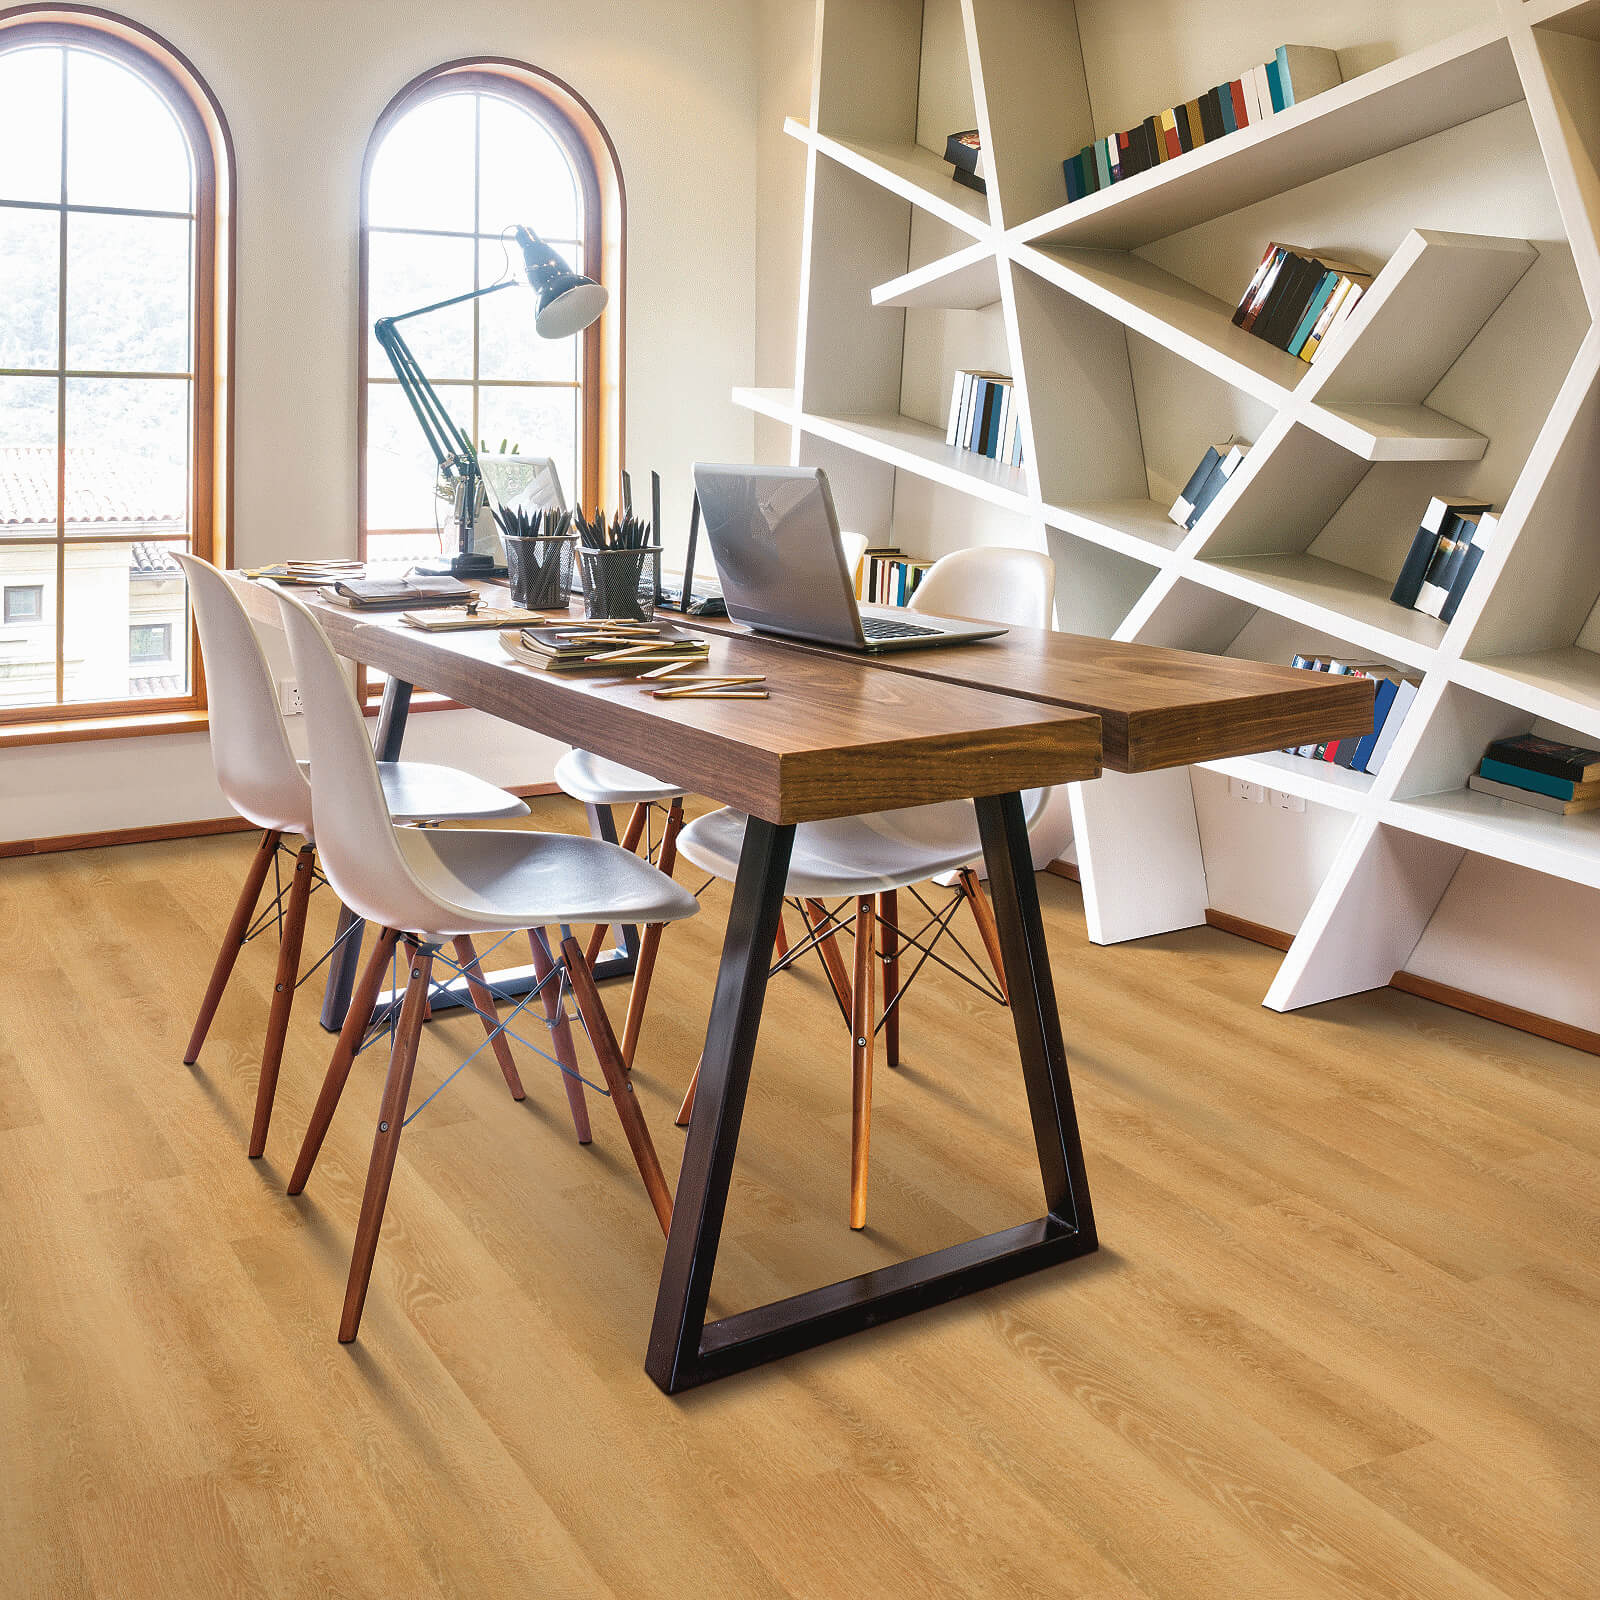 Vinyl flooring for study room | Carpetland USA Wisconsin